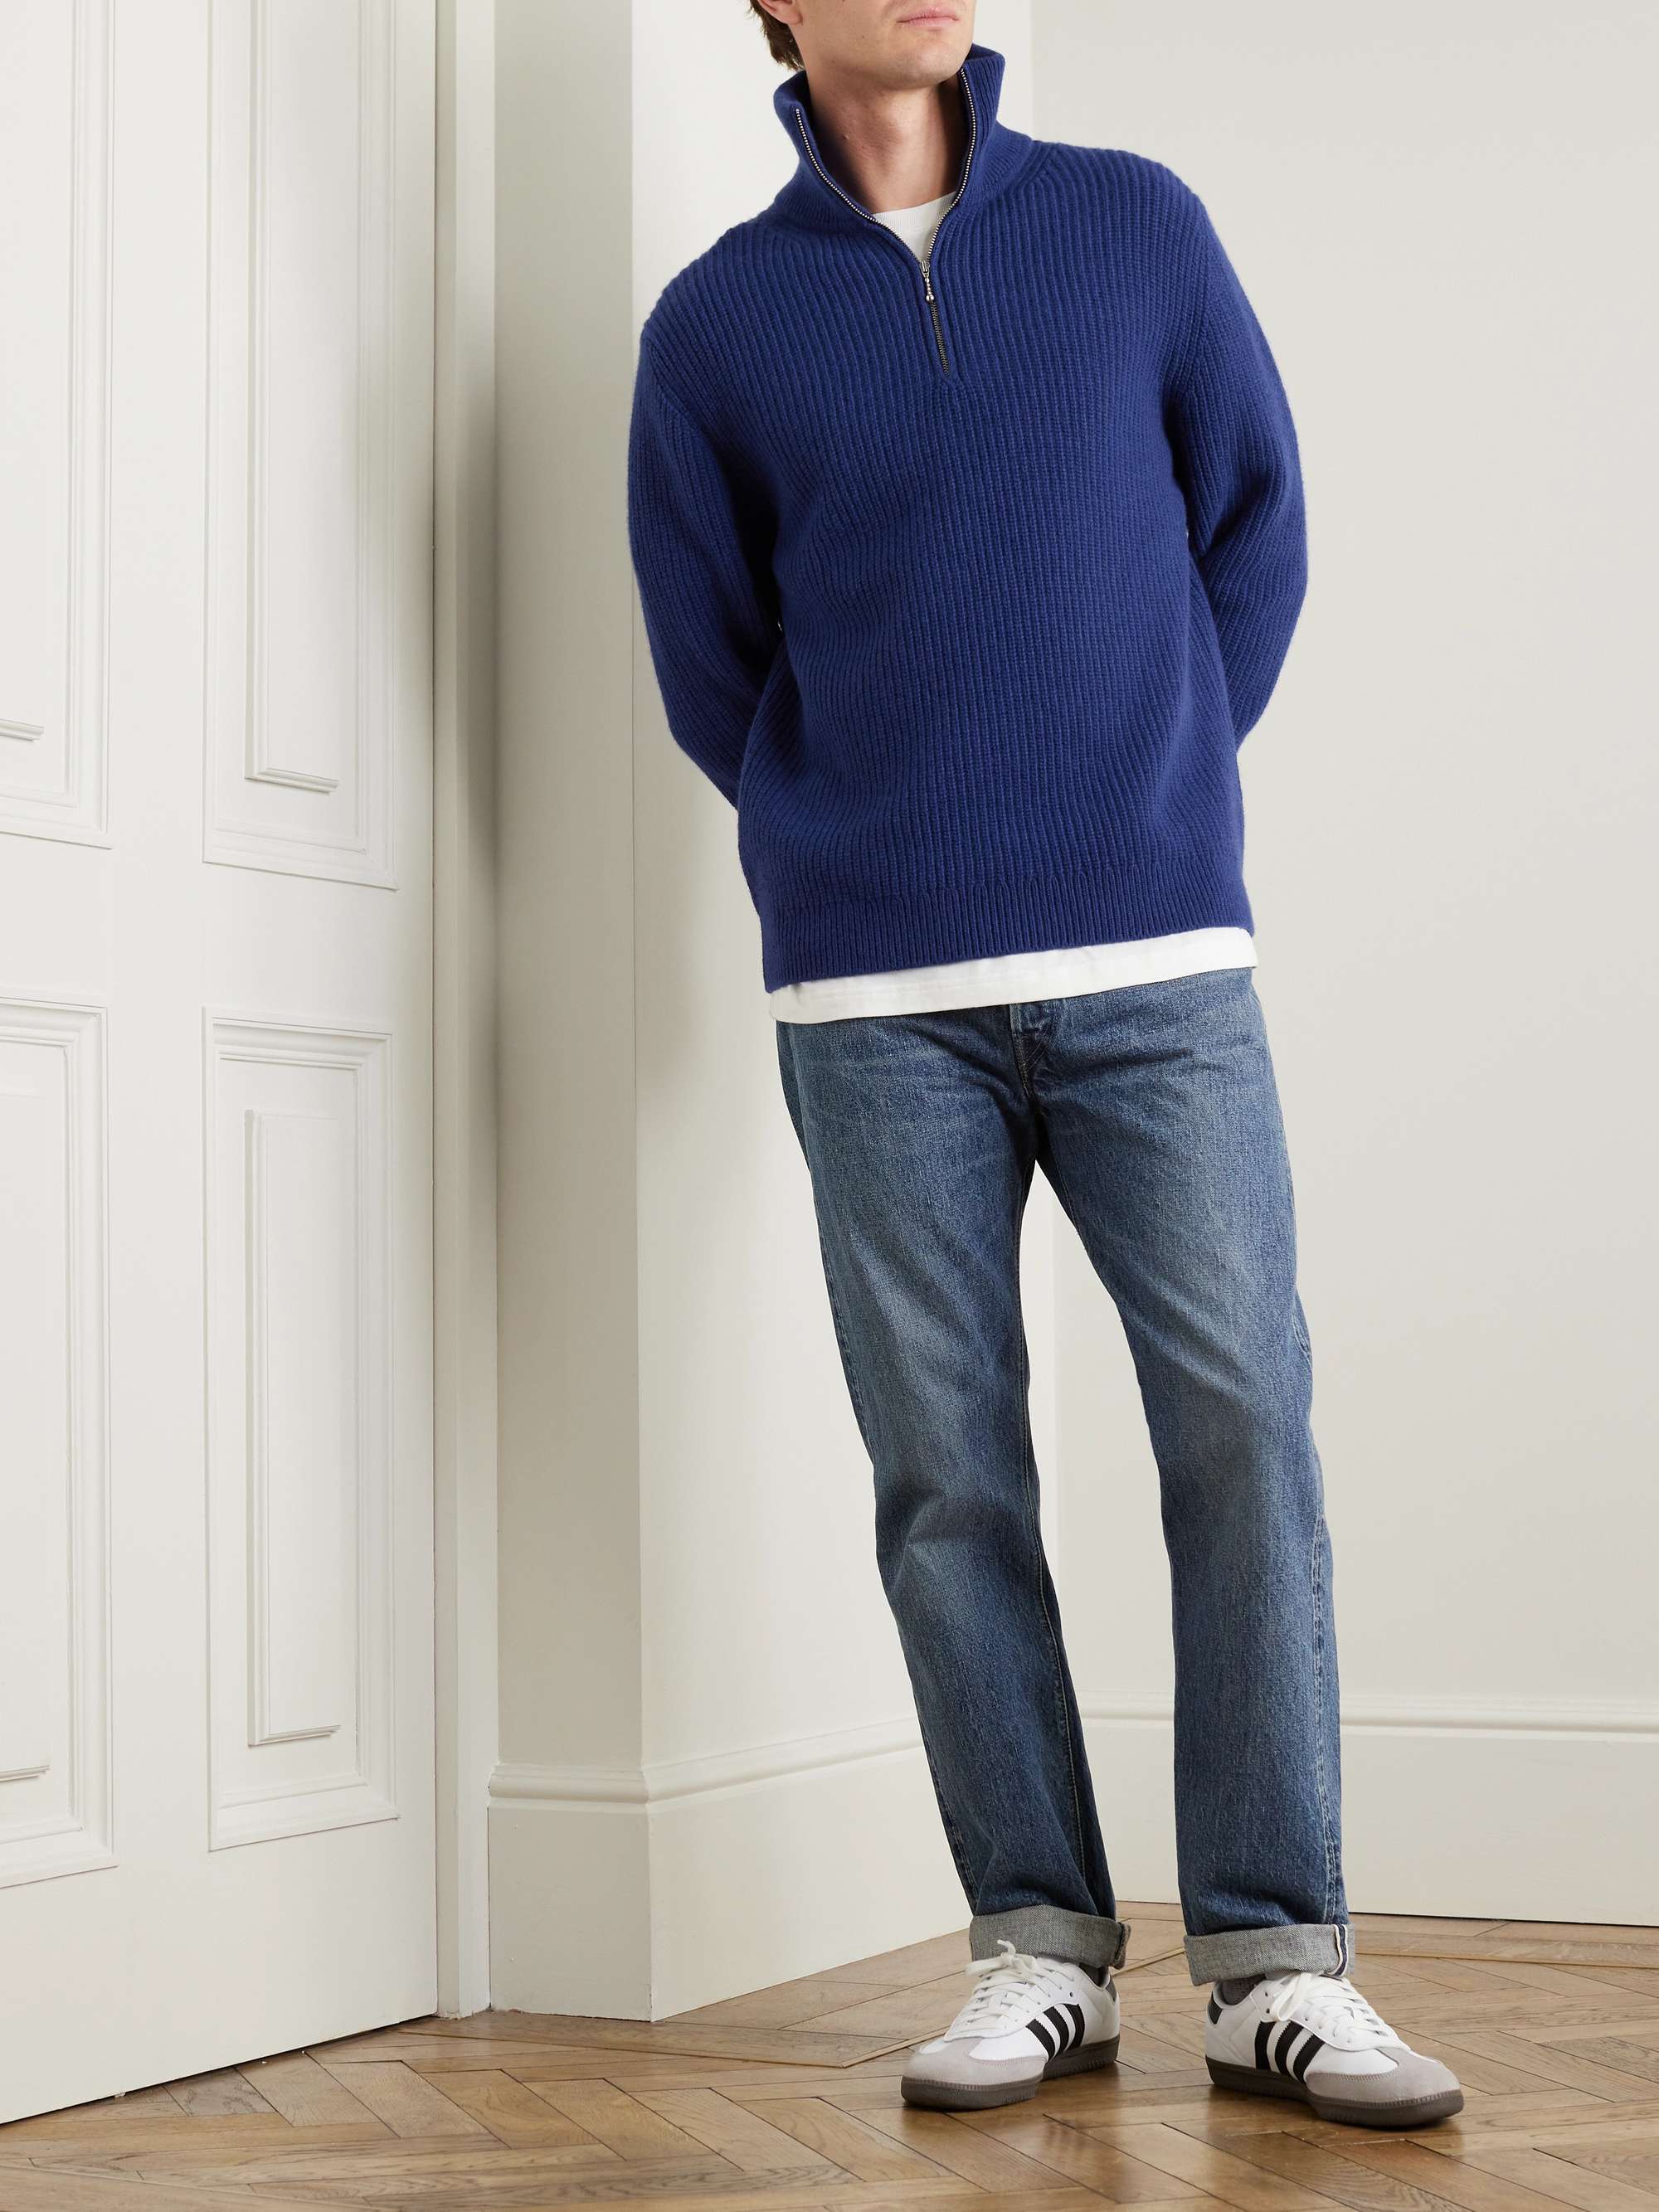 NUDIE JEANS August Ribbed Wool Half-Zip Sweater for Men | MR PORTER